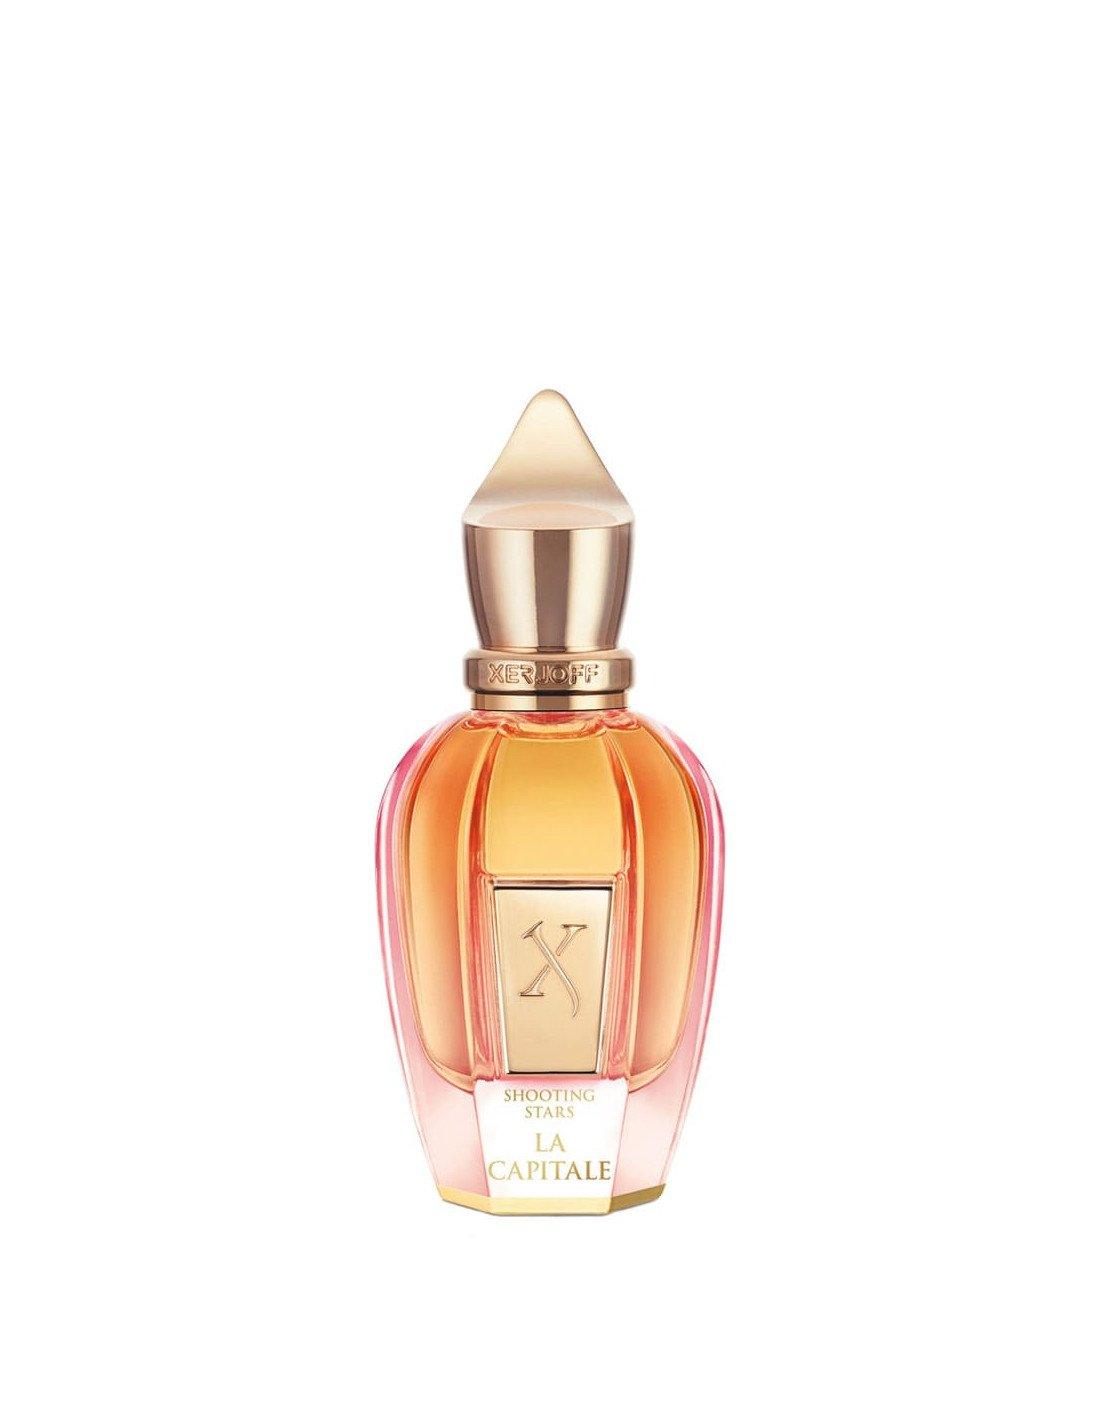 Buy Xerjoff La Capitale Parfum Online - Parfums De France